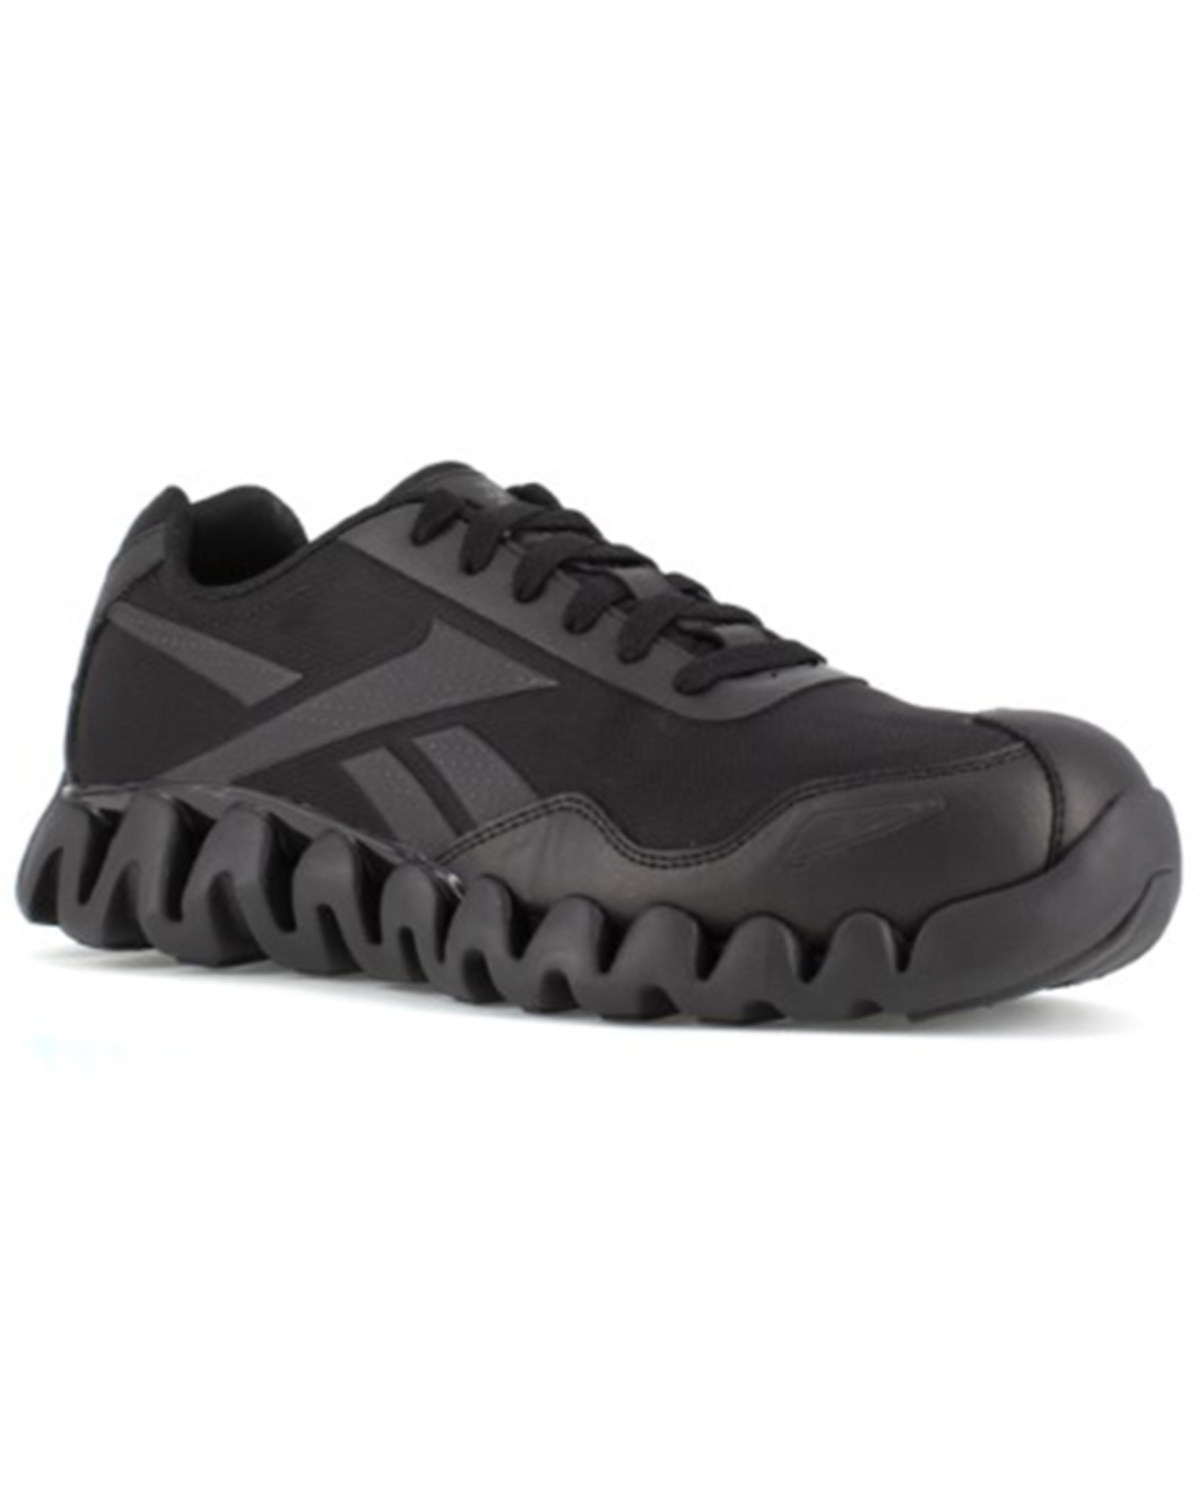 Reebok Men's Zig Pulse Metal Free Lace-Up Work Shoes - Composite Toe